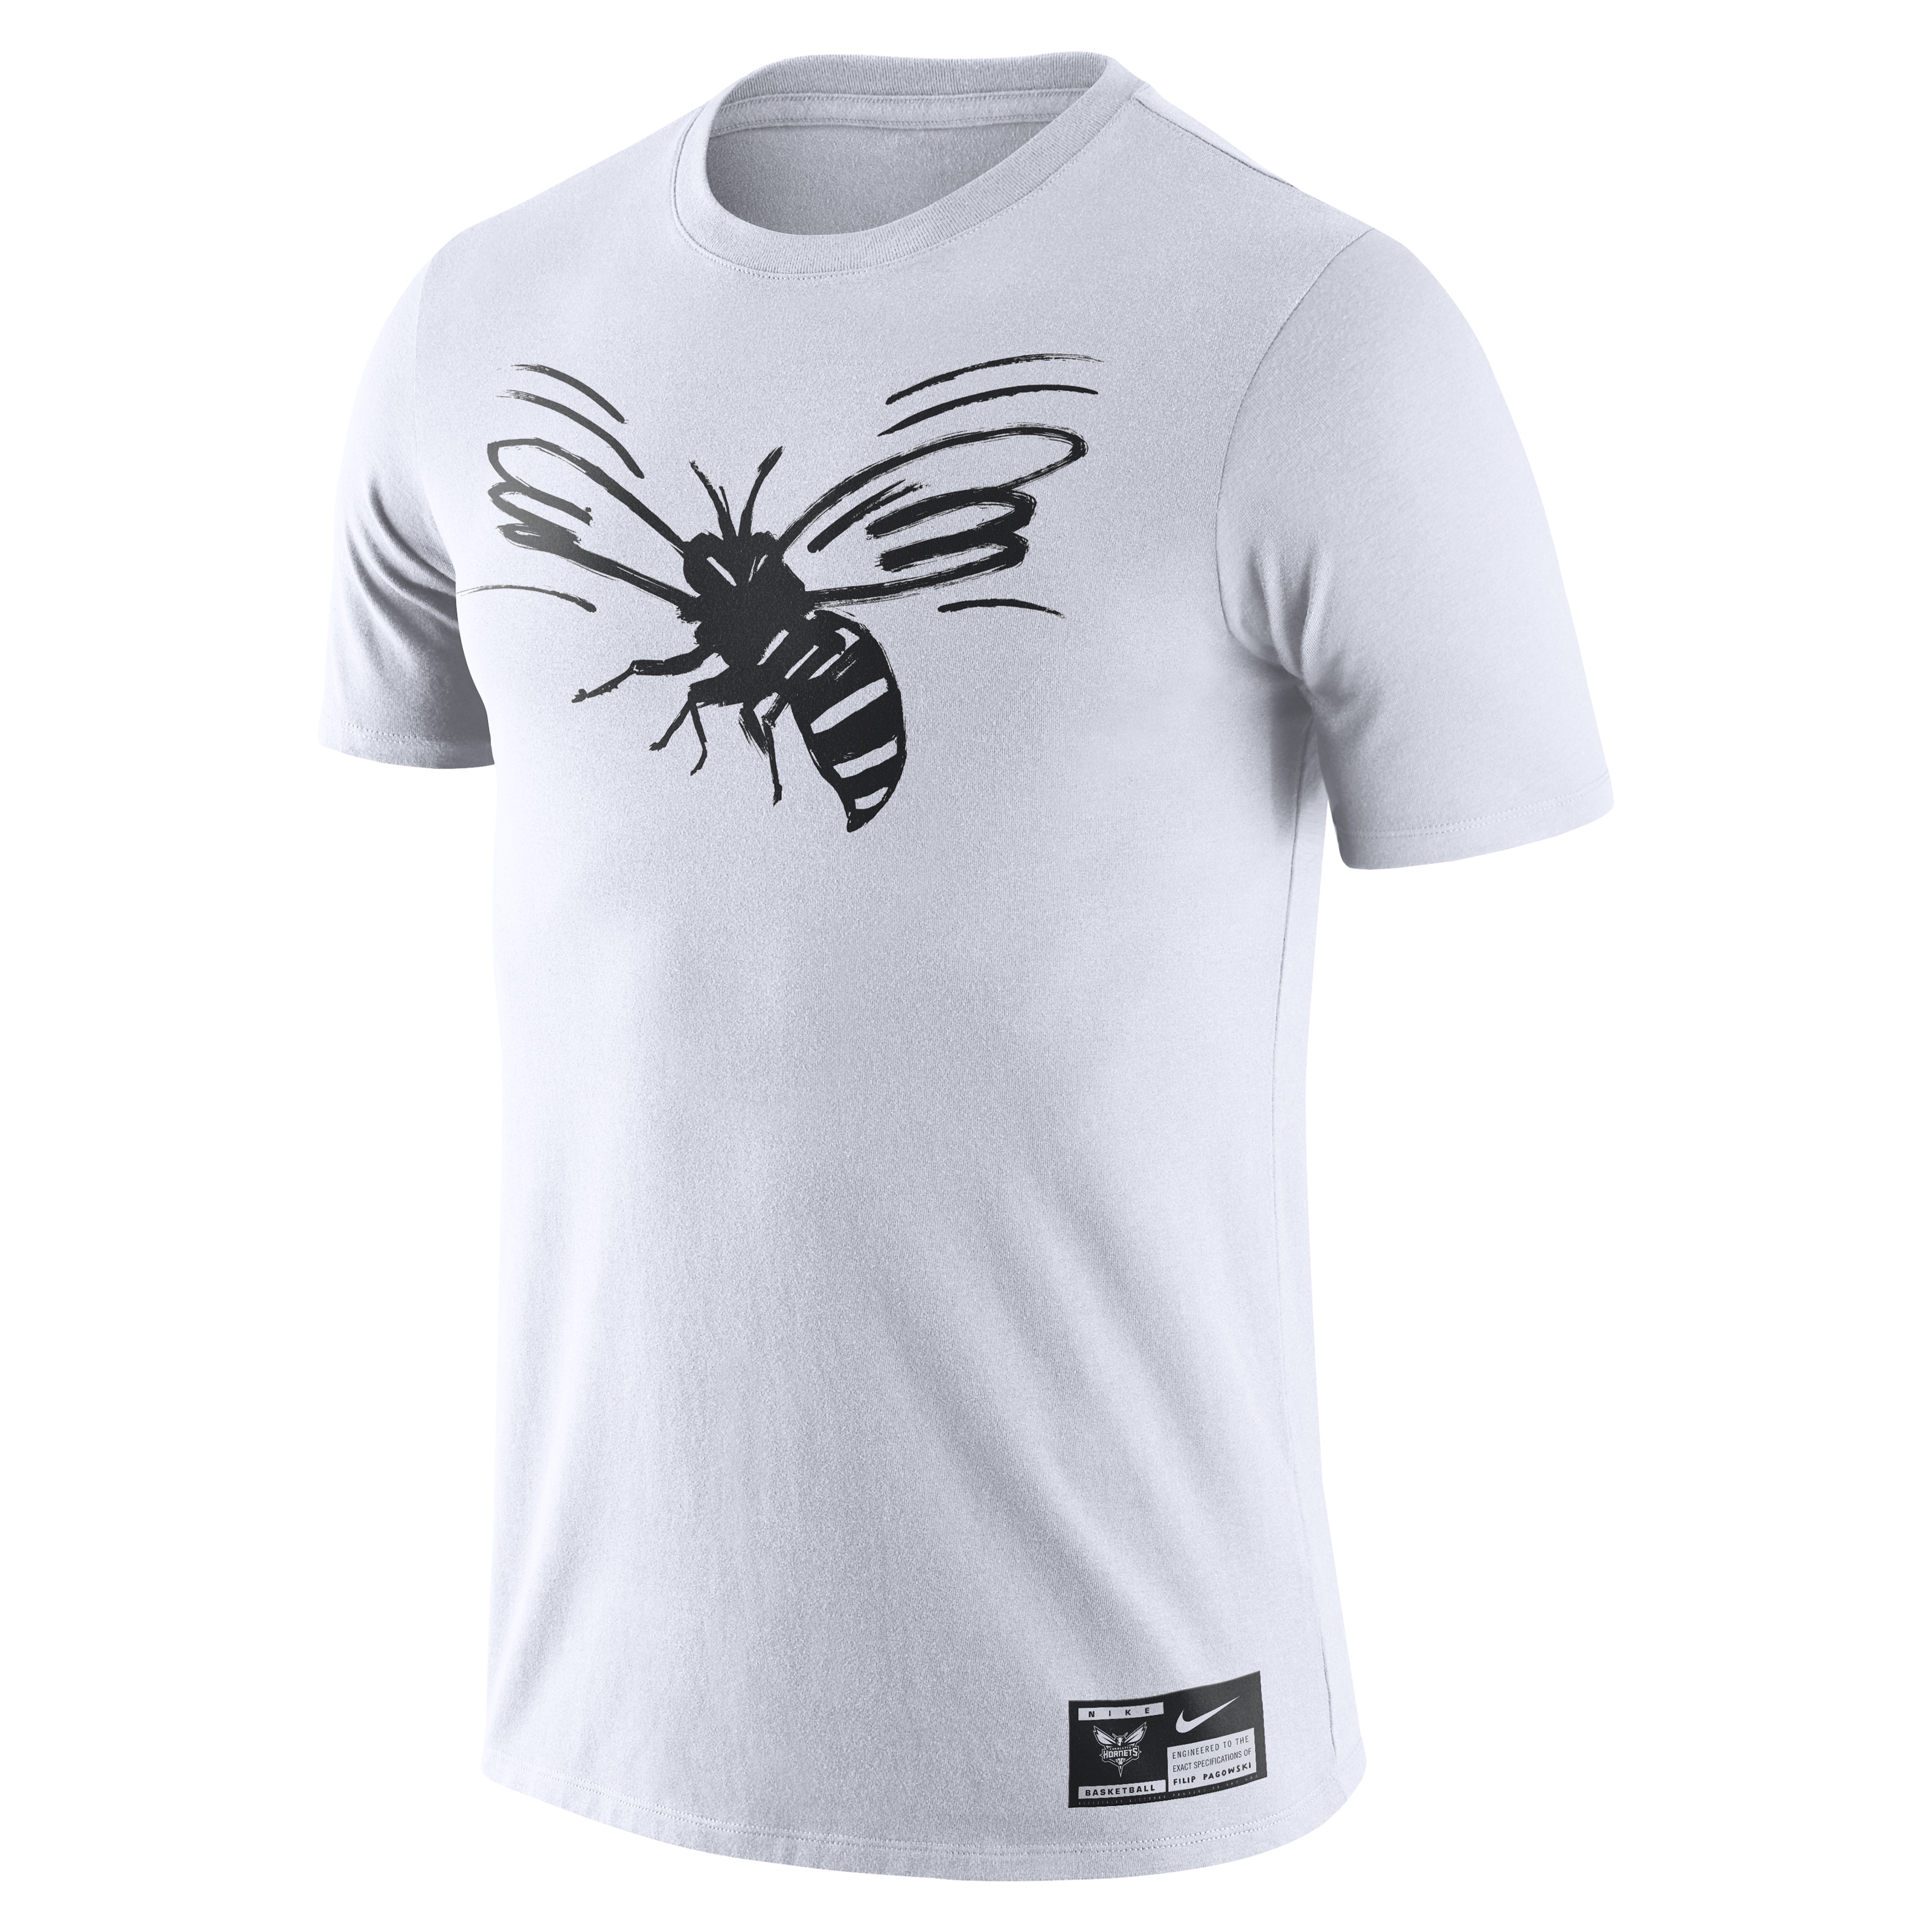 Filip Pagowski Nike T shirt &#x27;Charlotte Hornets&#x27;